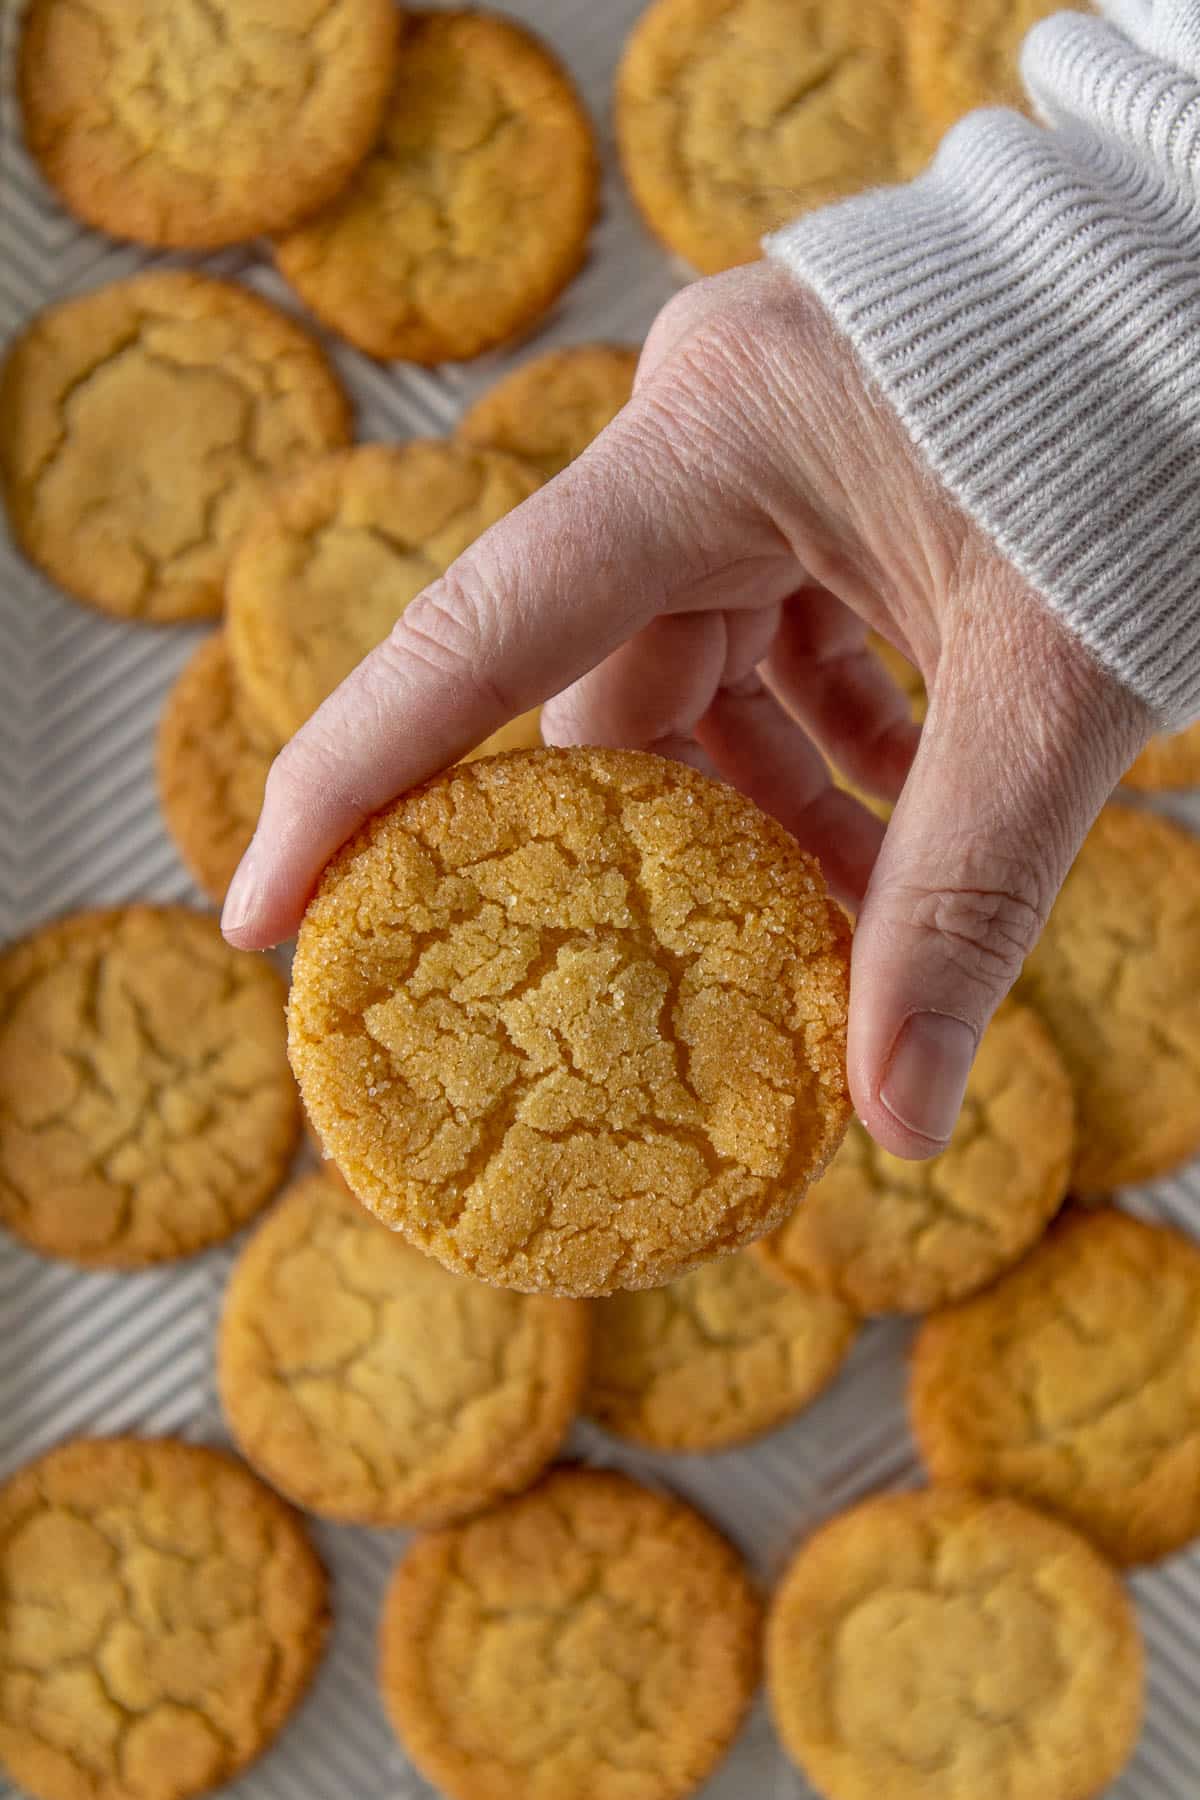 A hand lifting a vanilla sugar cookie off the baking tray.